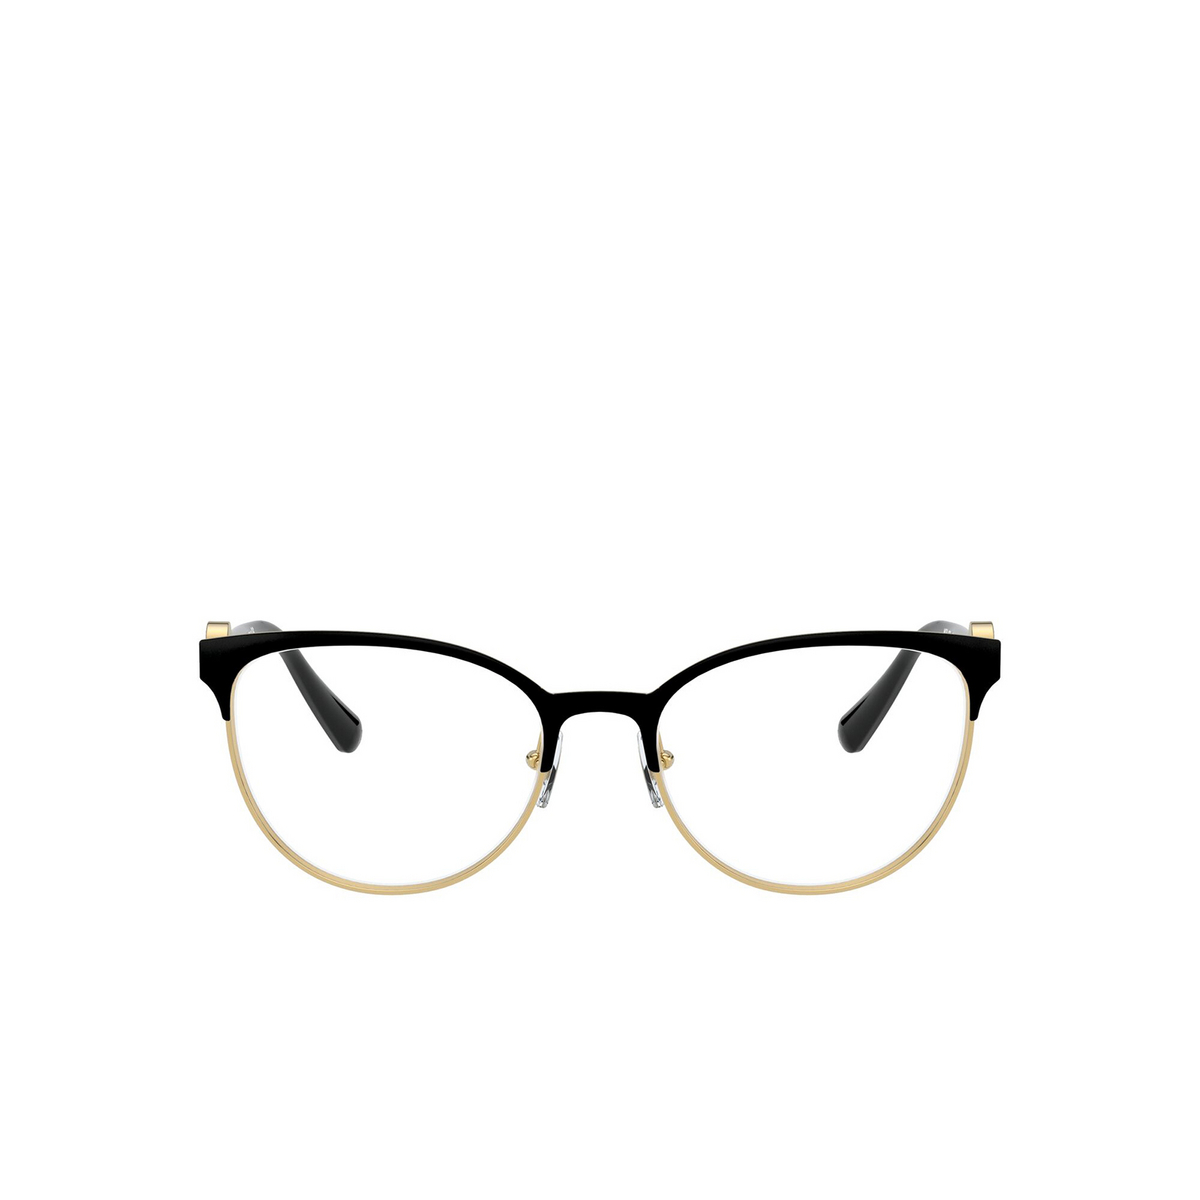 Versace® Cat-eye Eyeglasses: VE1271 color Black / Gold 1433 - front view.